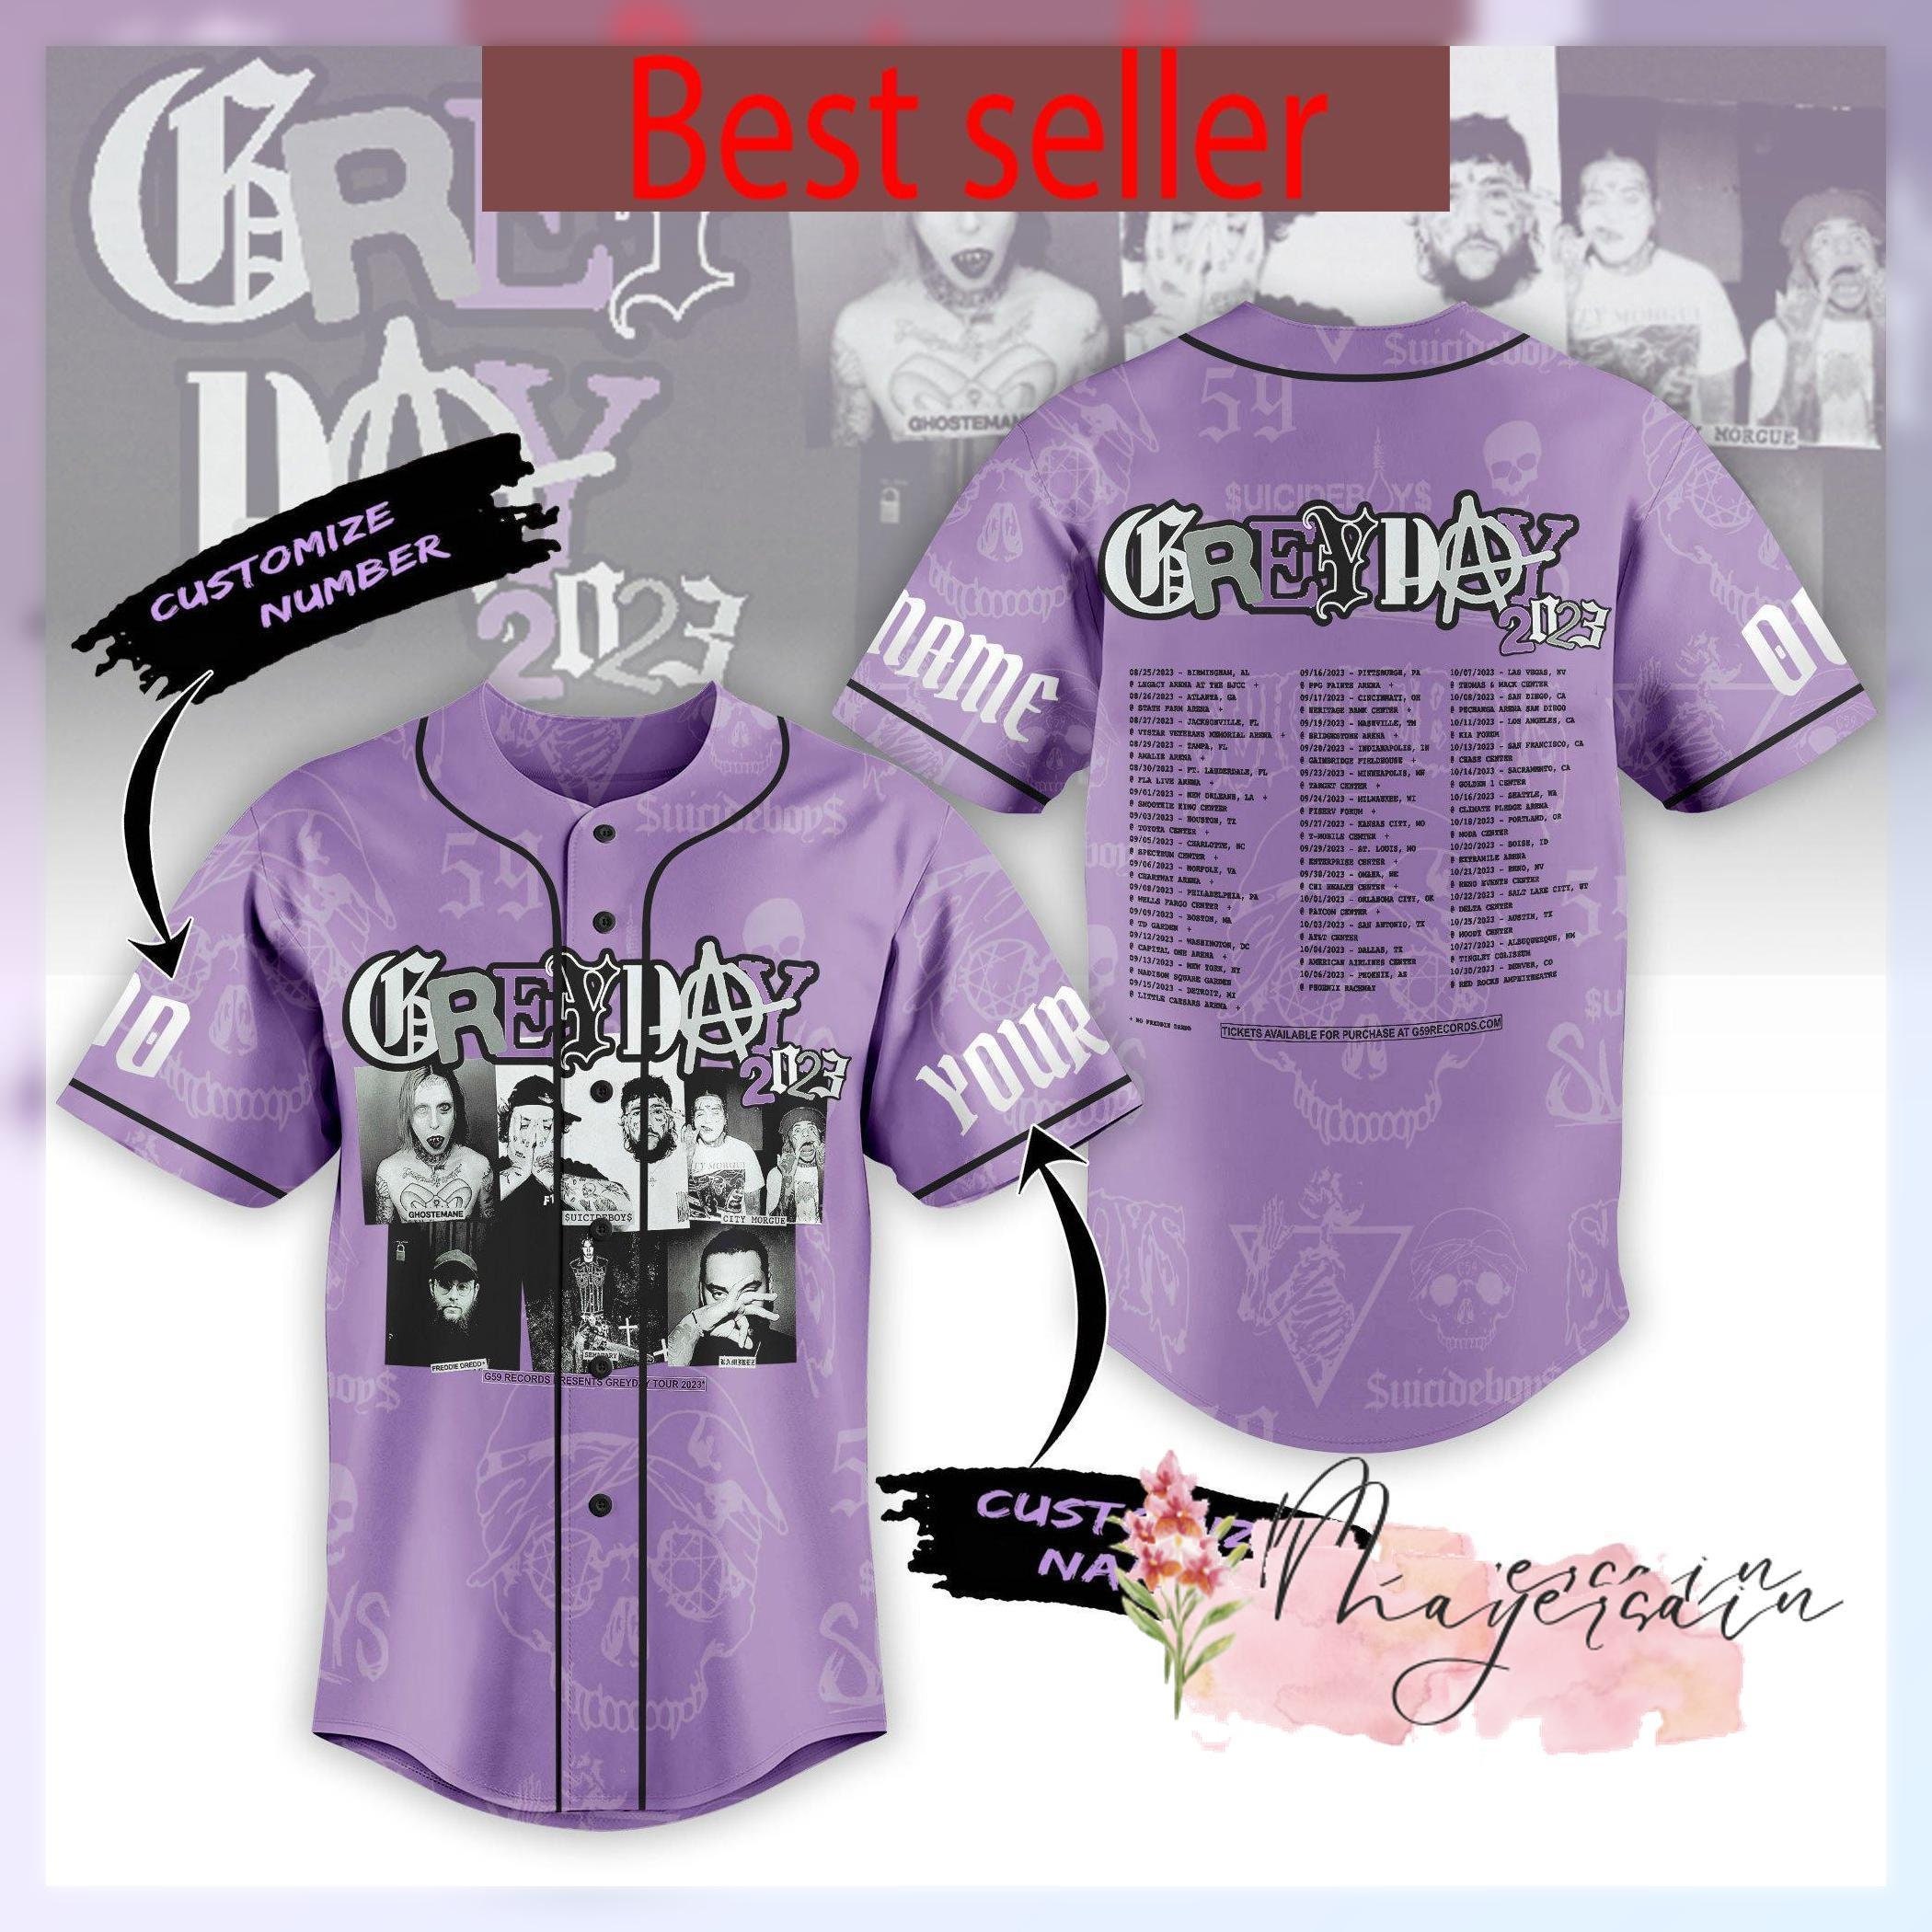 Custom Men Women Youth Baseball Jersey Hip Hop Baseball City Shirt Name  Number S-4XL Purple-Gray